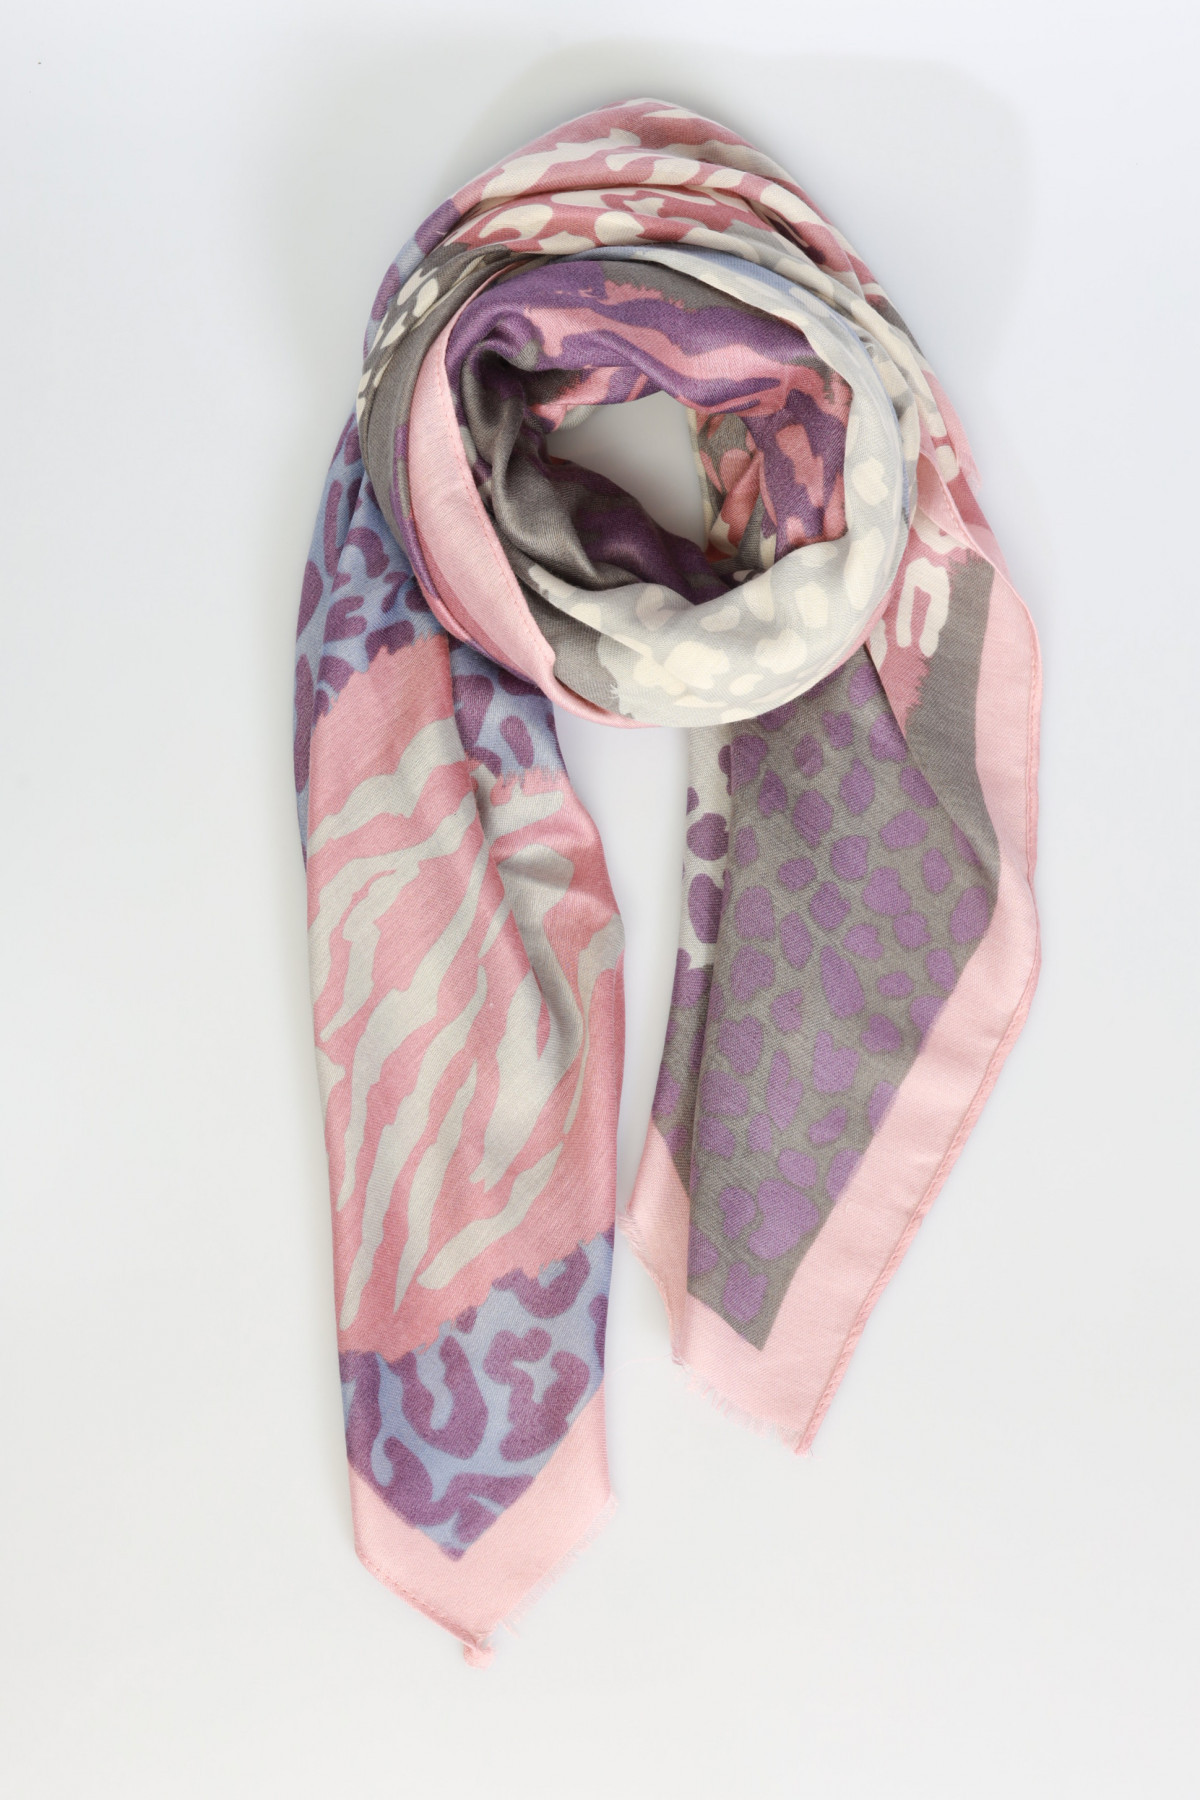 Animal print scarf